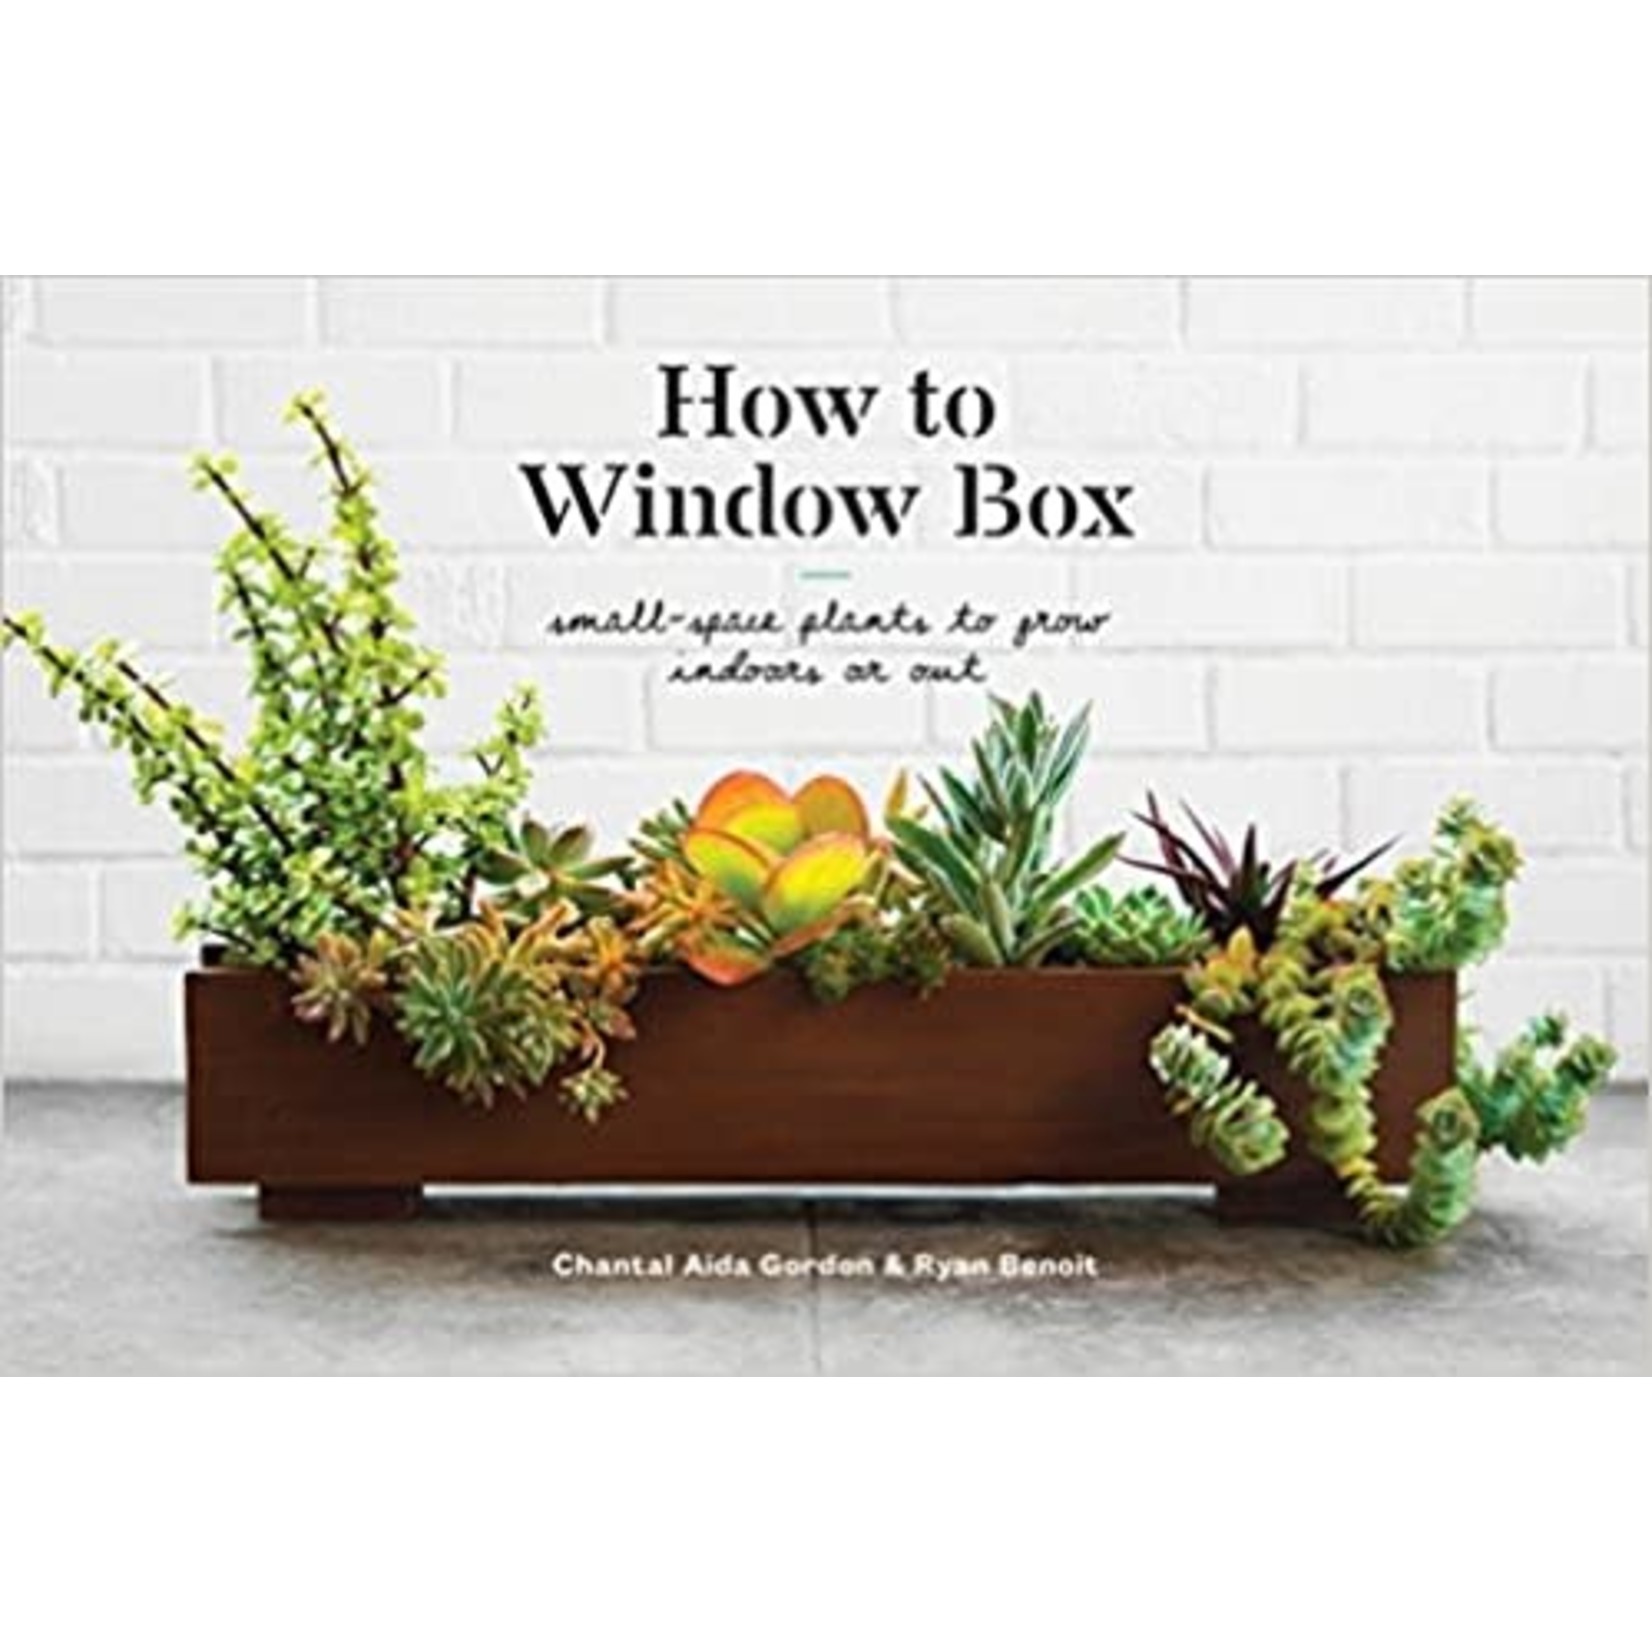 How to Window Box